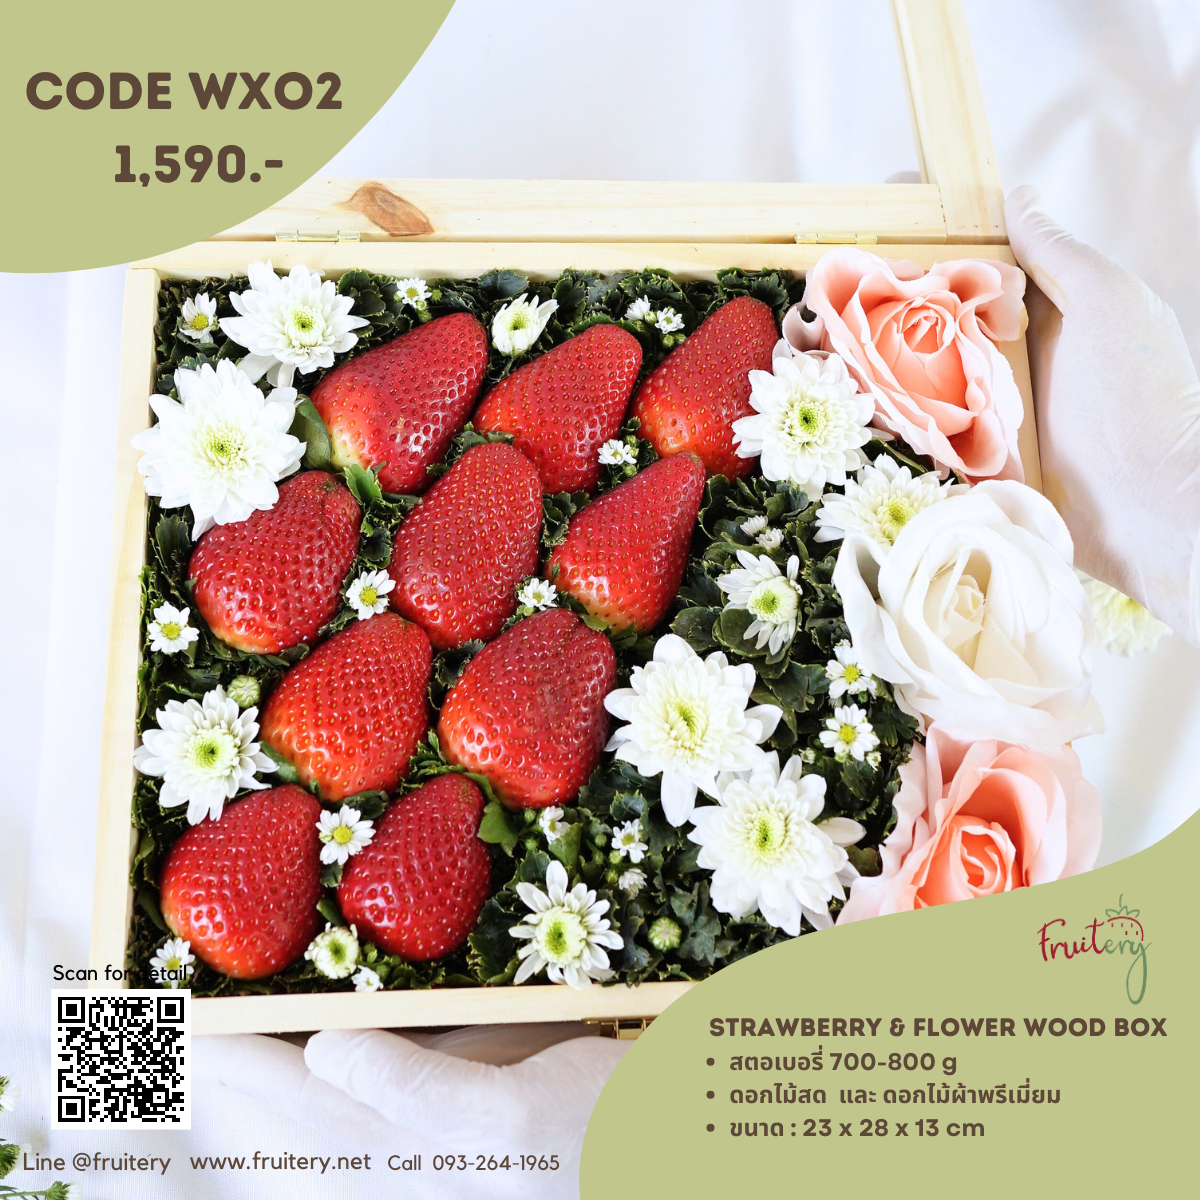 WX02 Strawberry & Flower Wood box